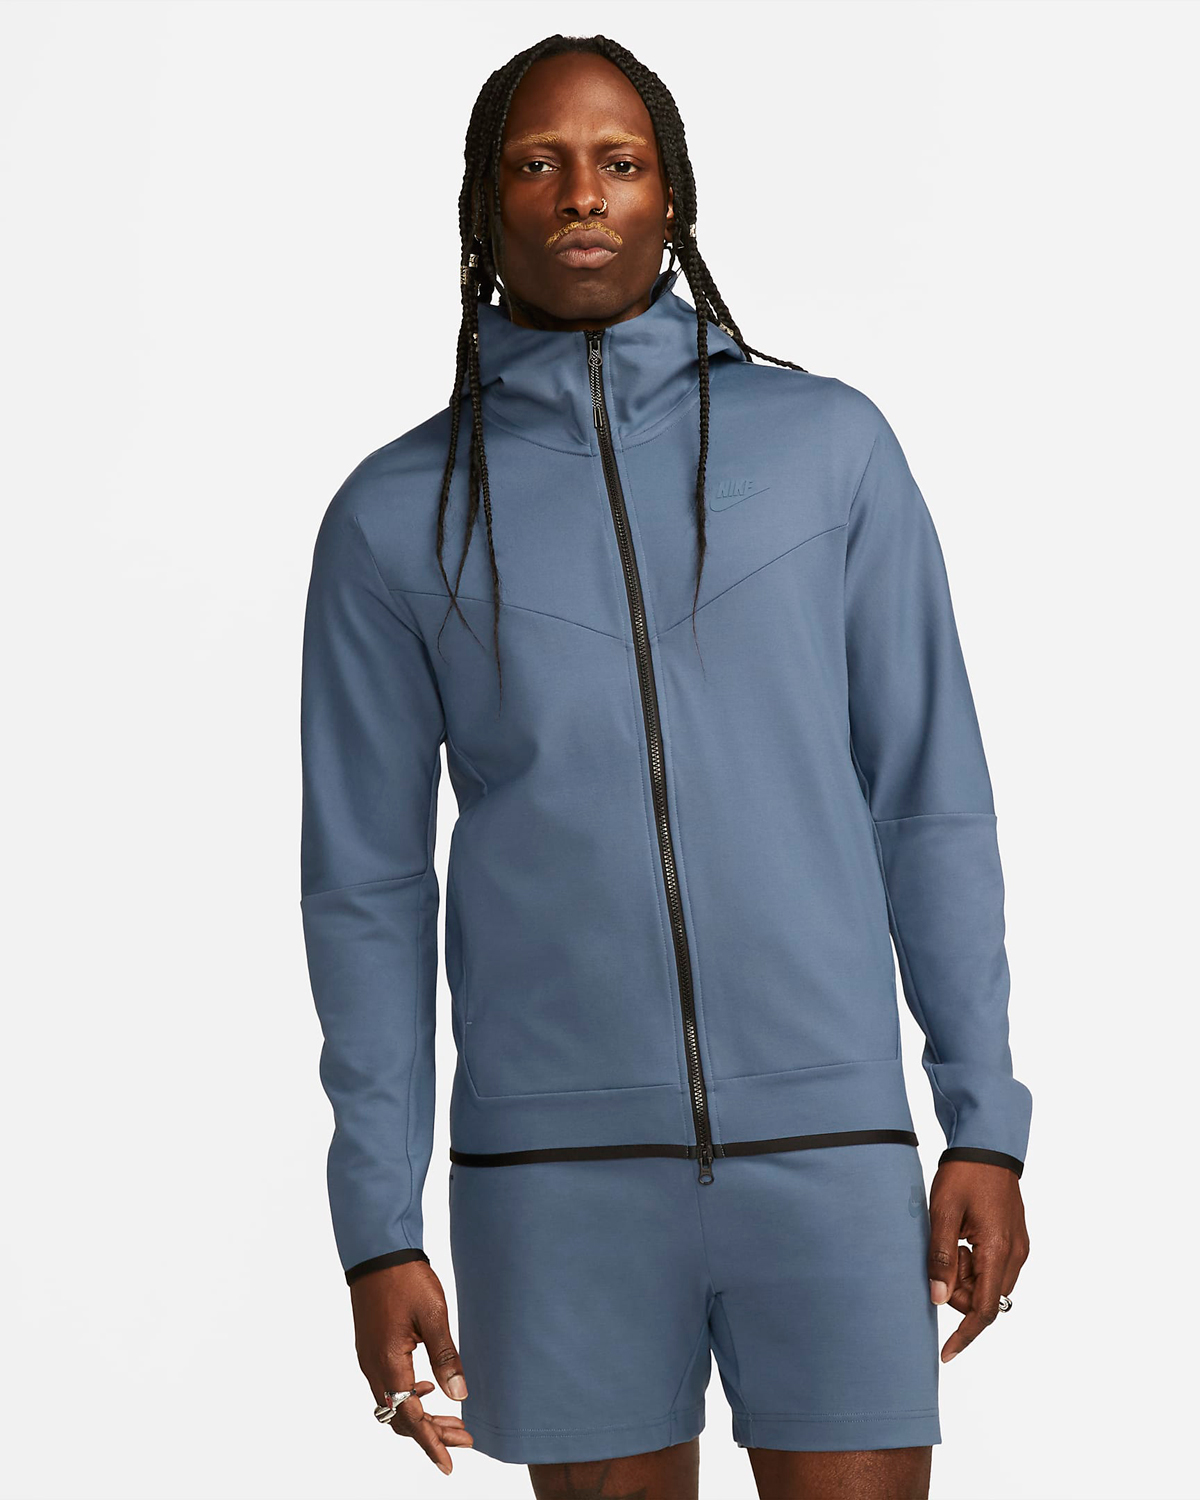 Nike-Tech-Fleece-Lightweight-Zip-Hoodie-Diffused-Blue